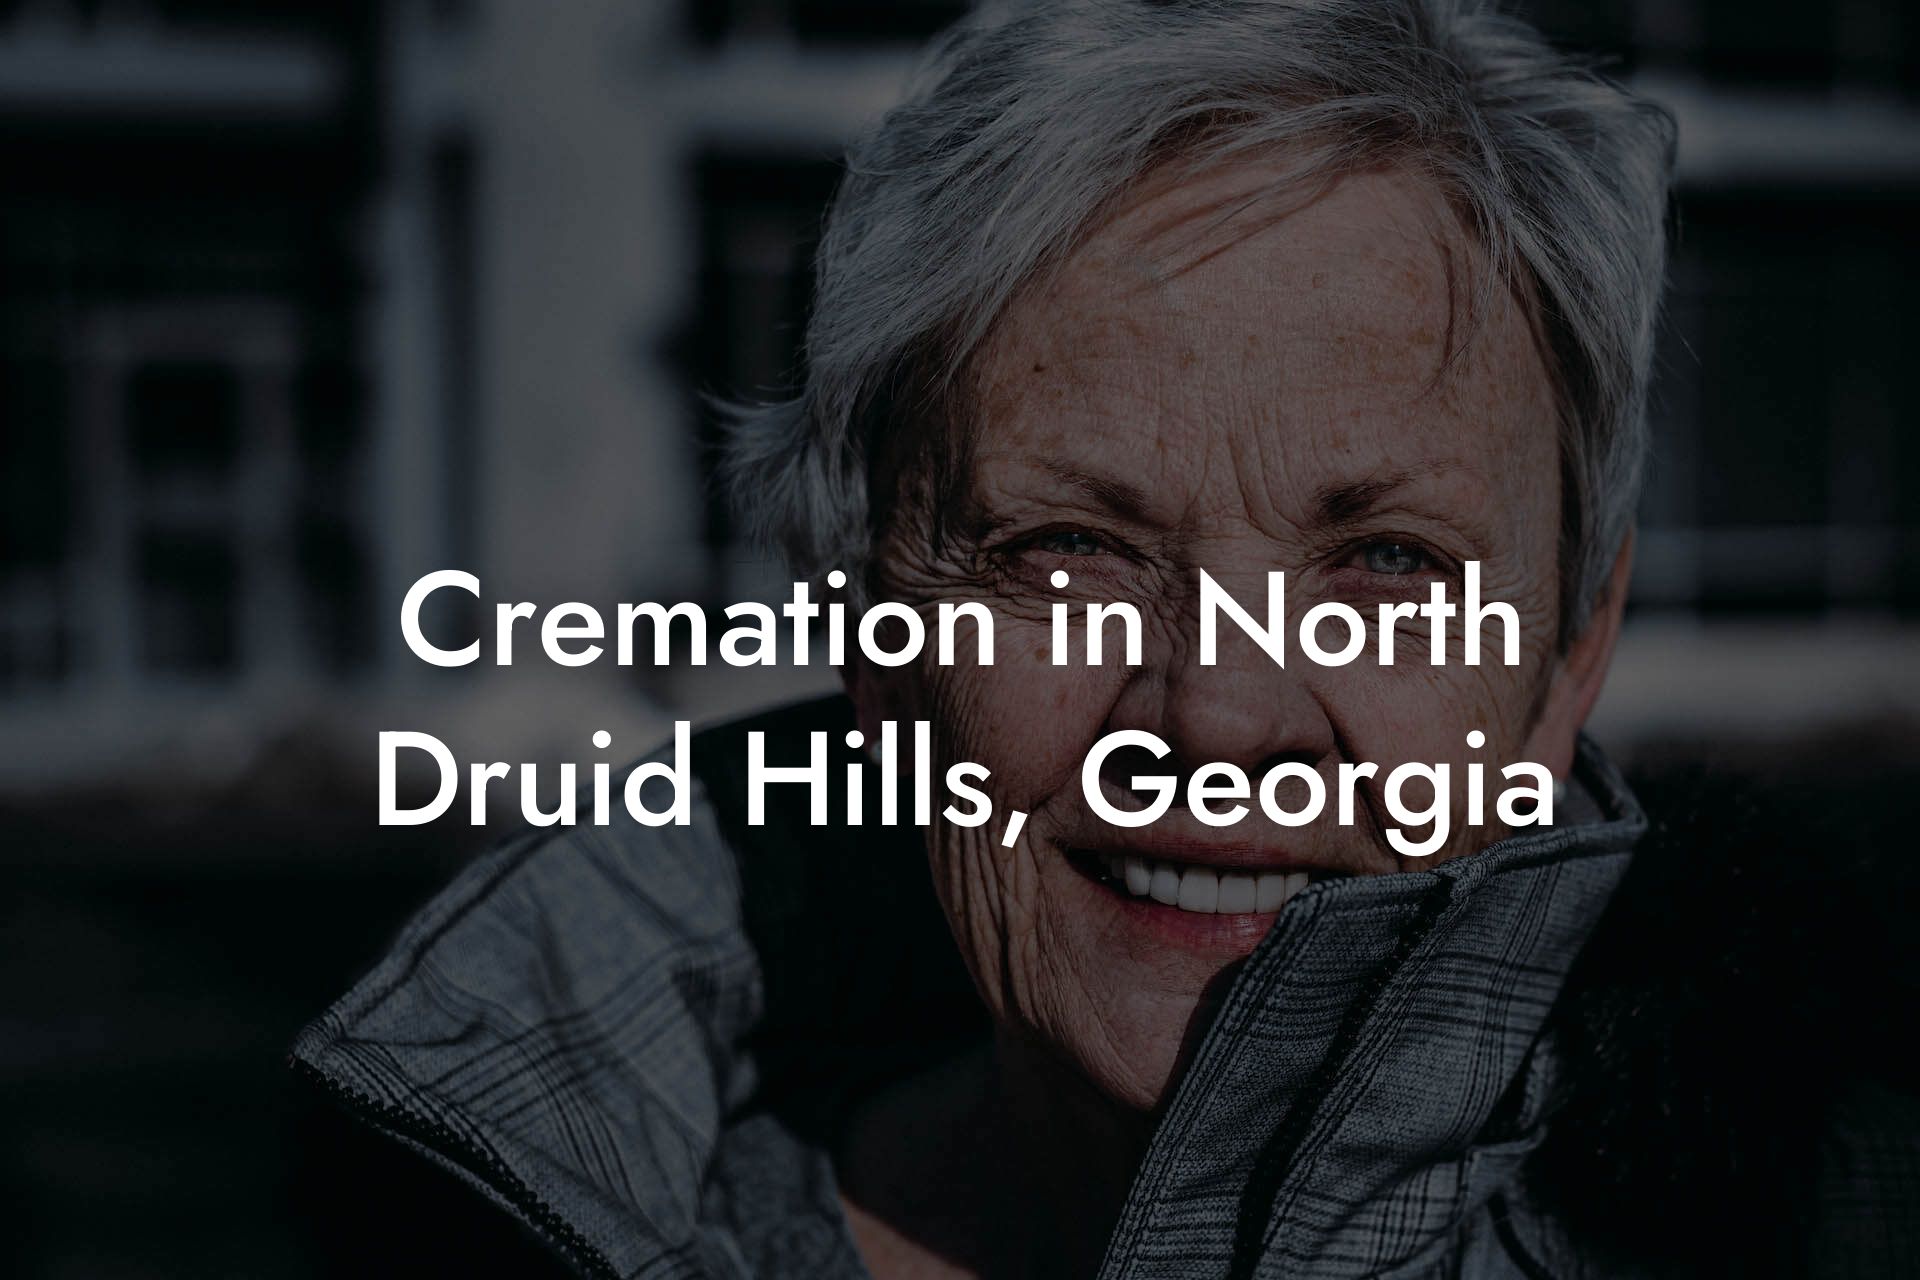 Cremation in North Druid Hills, Georgia